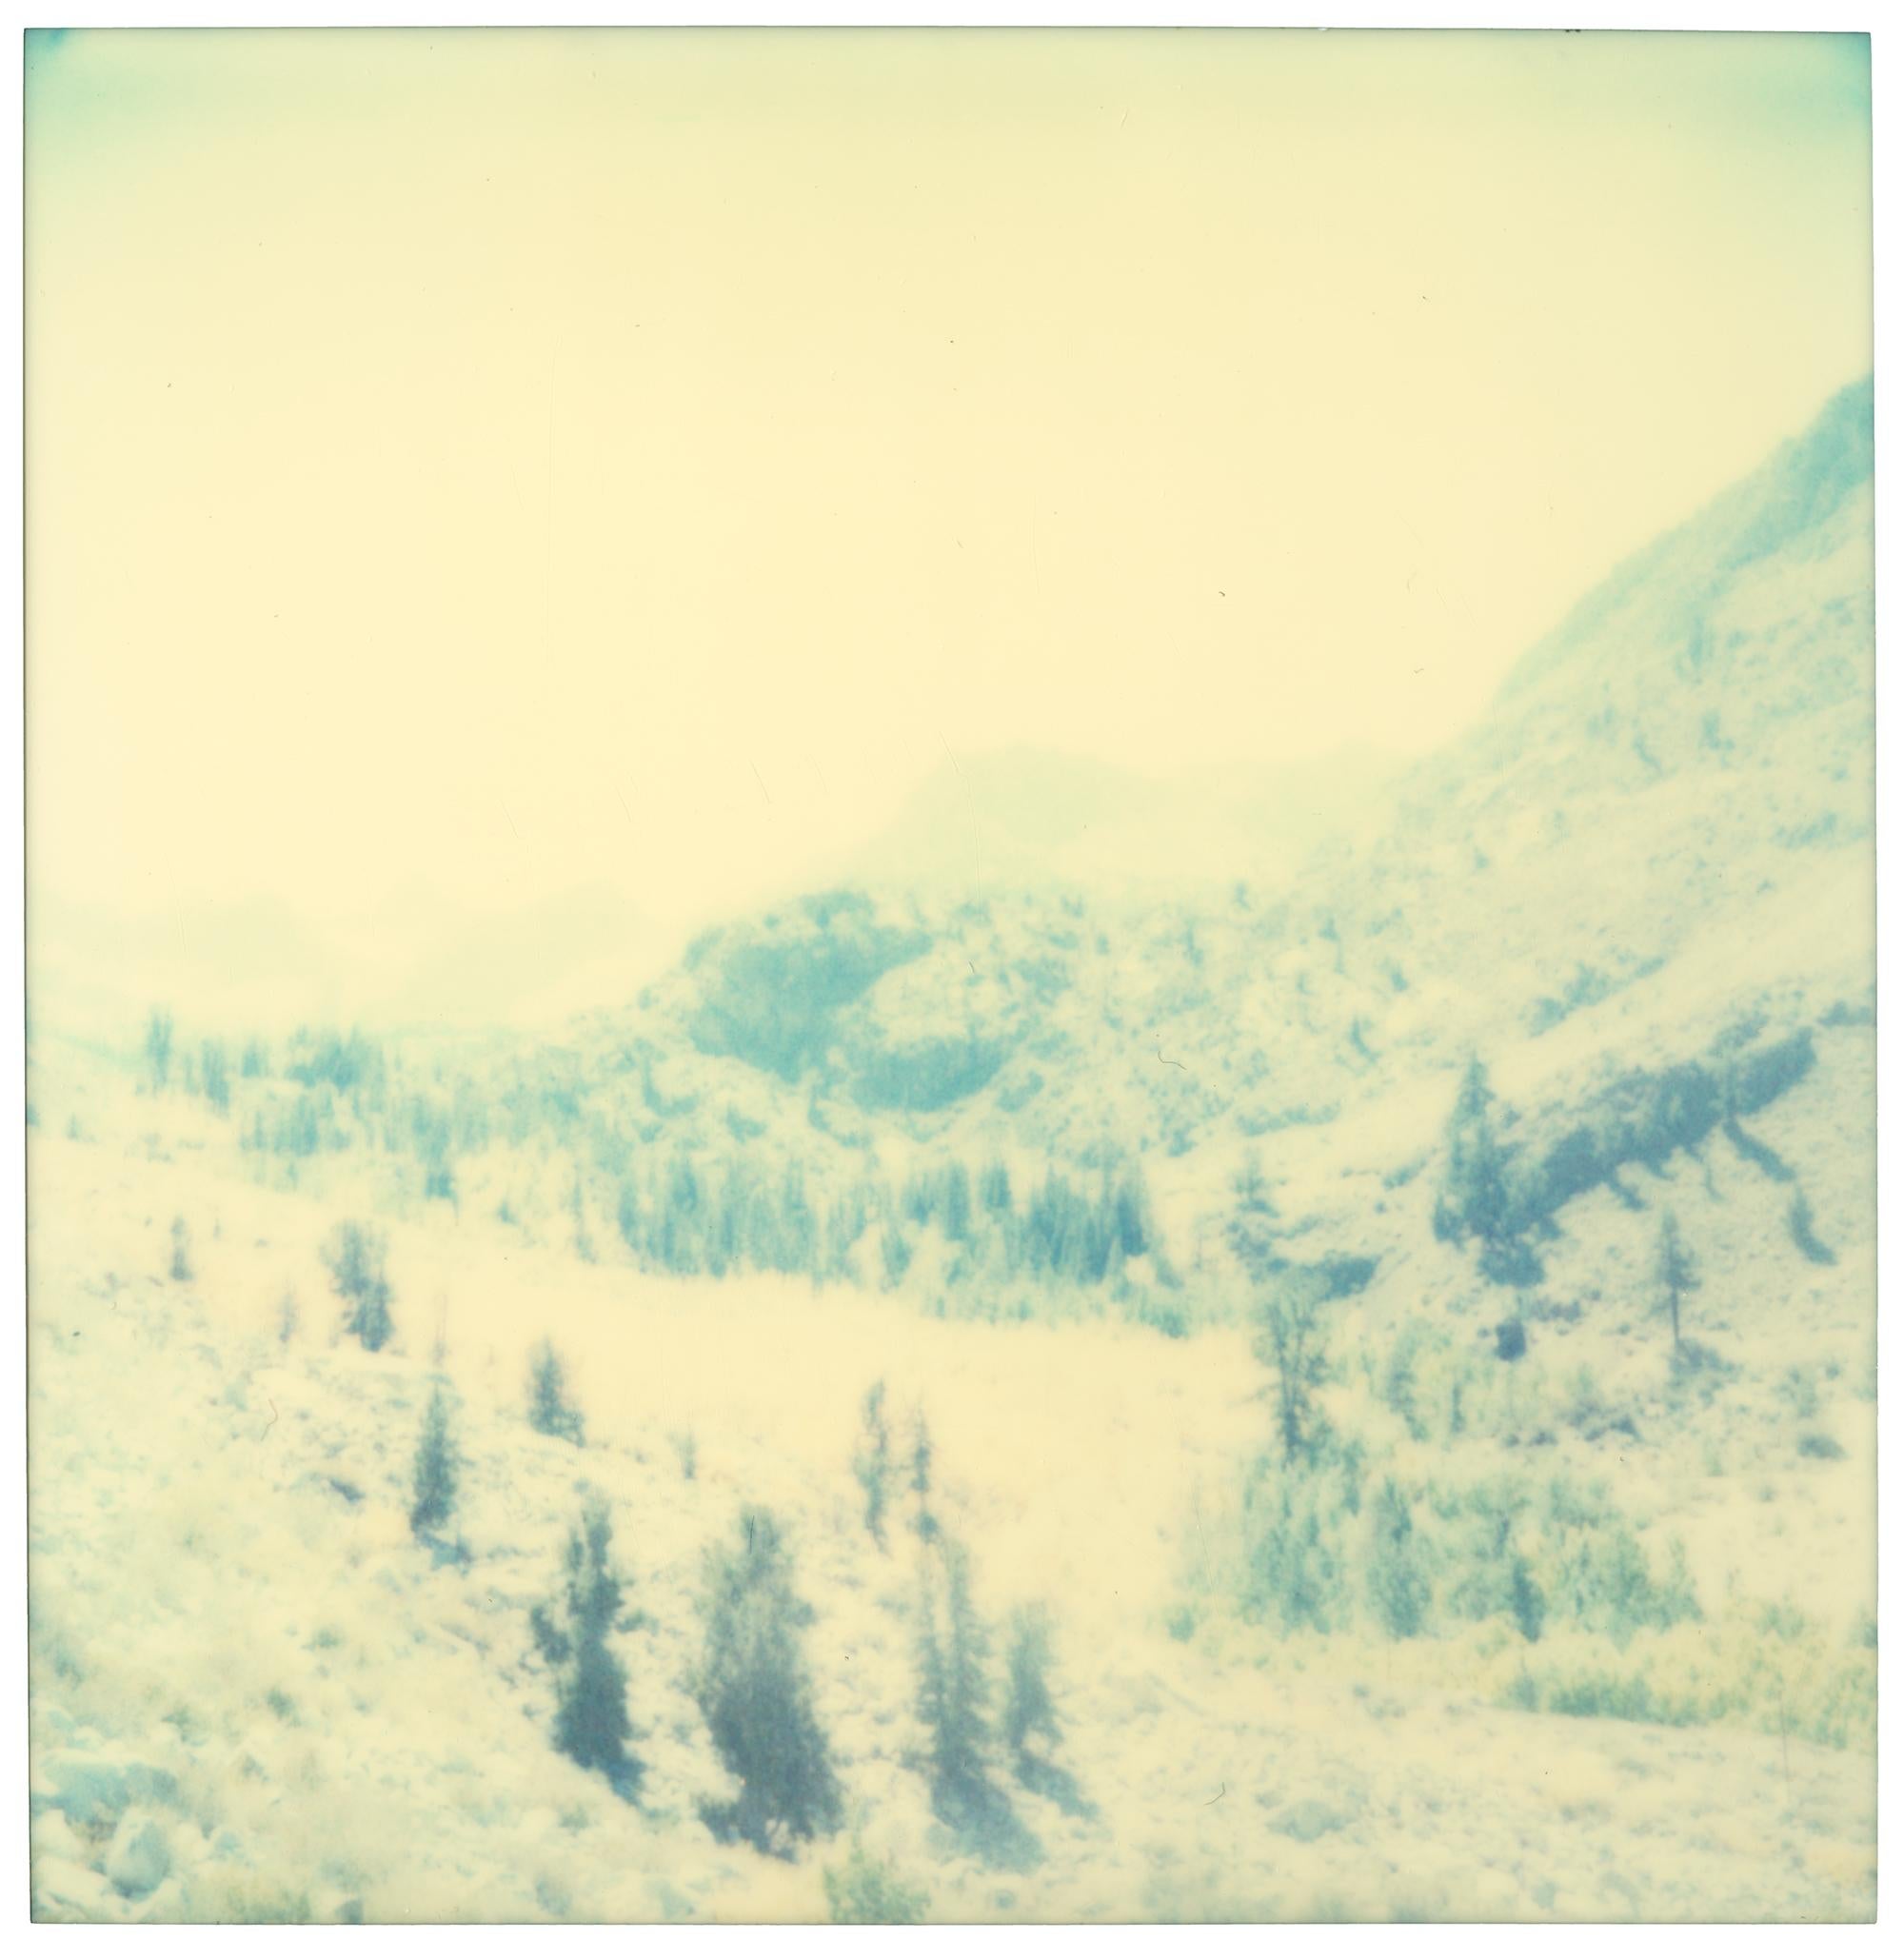 Stefanie Schneider Landscape Photograph - The Valley (Wastelands) - Polaroid, Contemporary, 21st Century, Color, Landscape